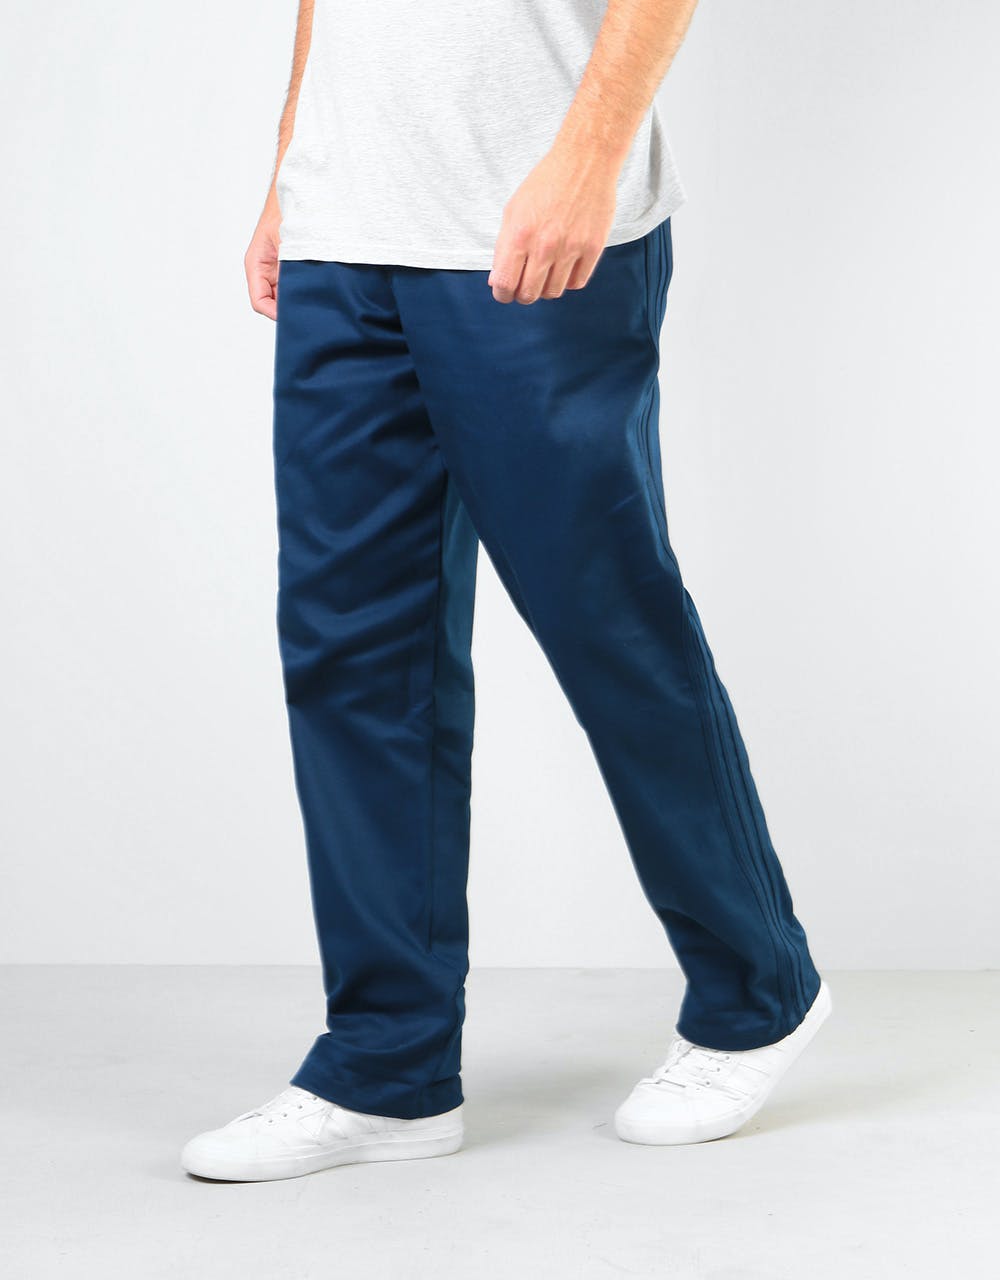 Adidas Stripe Chino Pant - Collegiate Navy